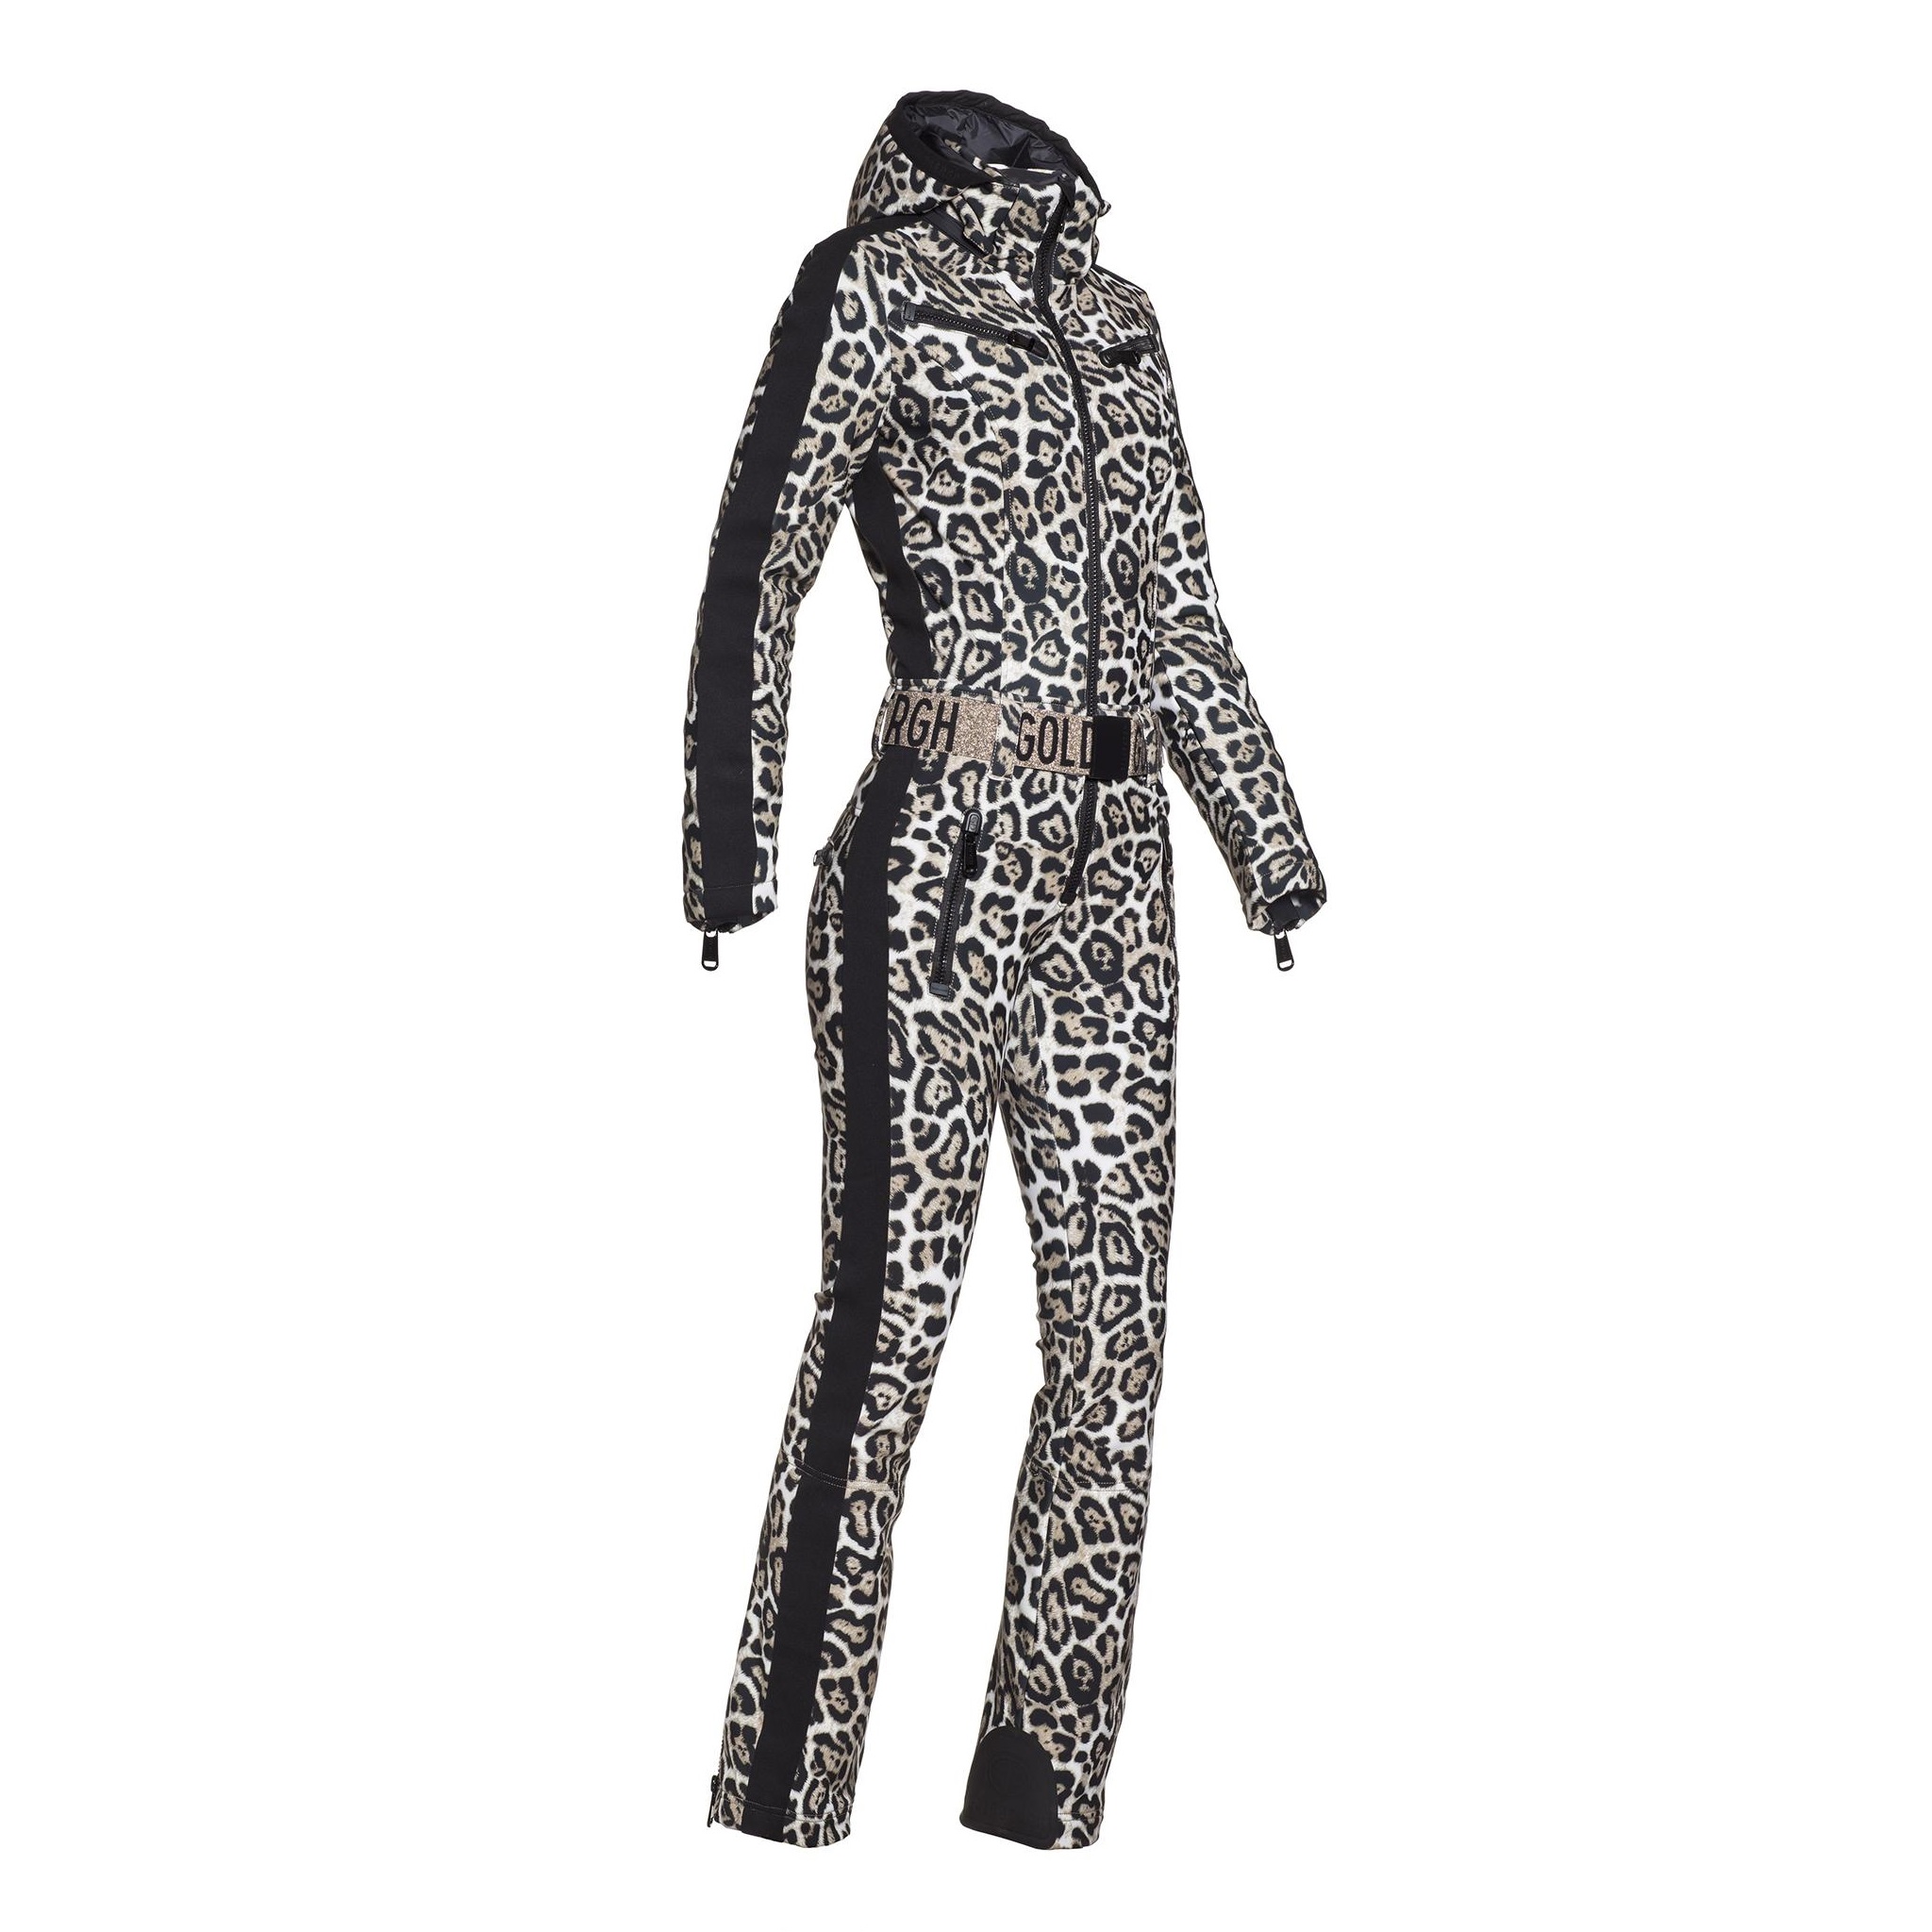 Geci Ski & Snow -  goldbergh Cougar Ski Suit